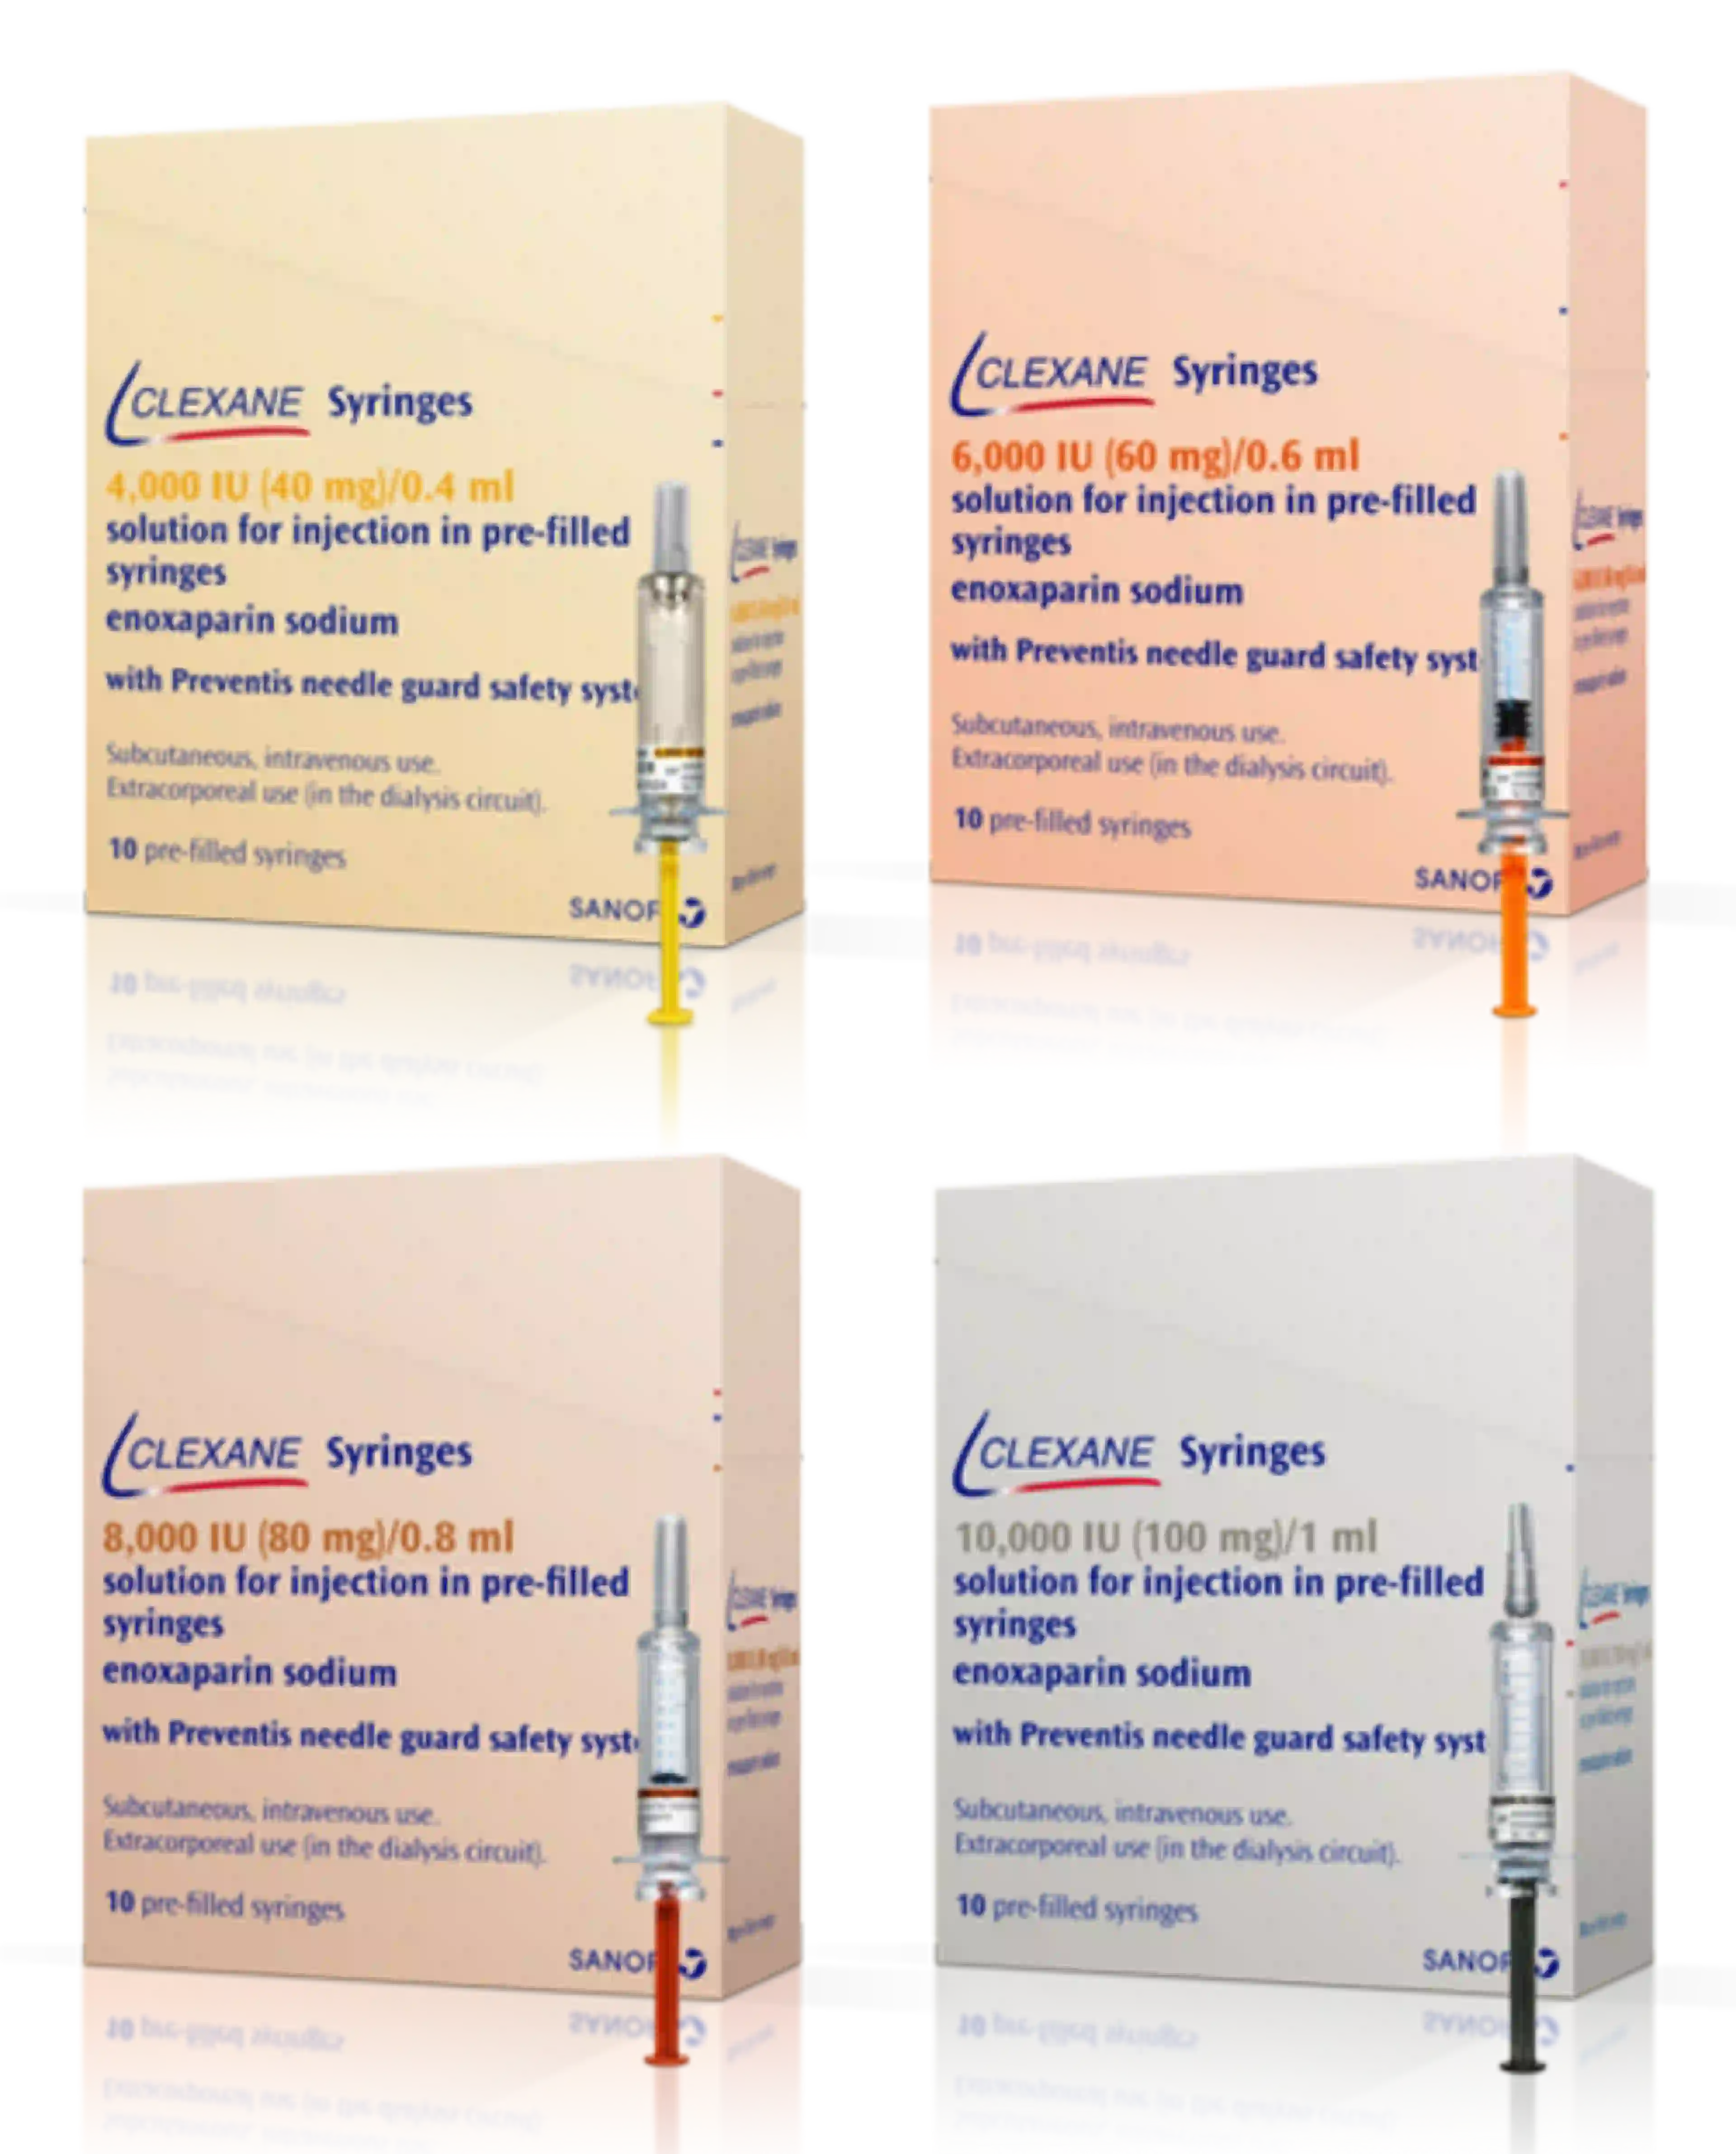 Clexane-syringe-packs